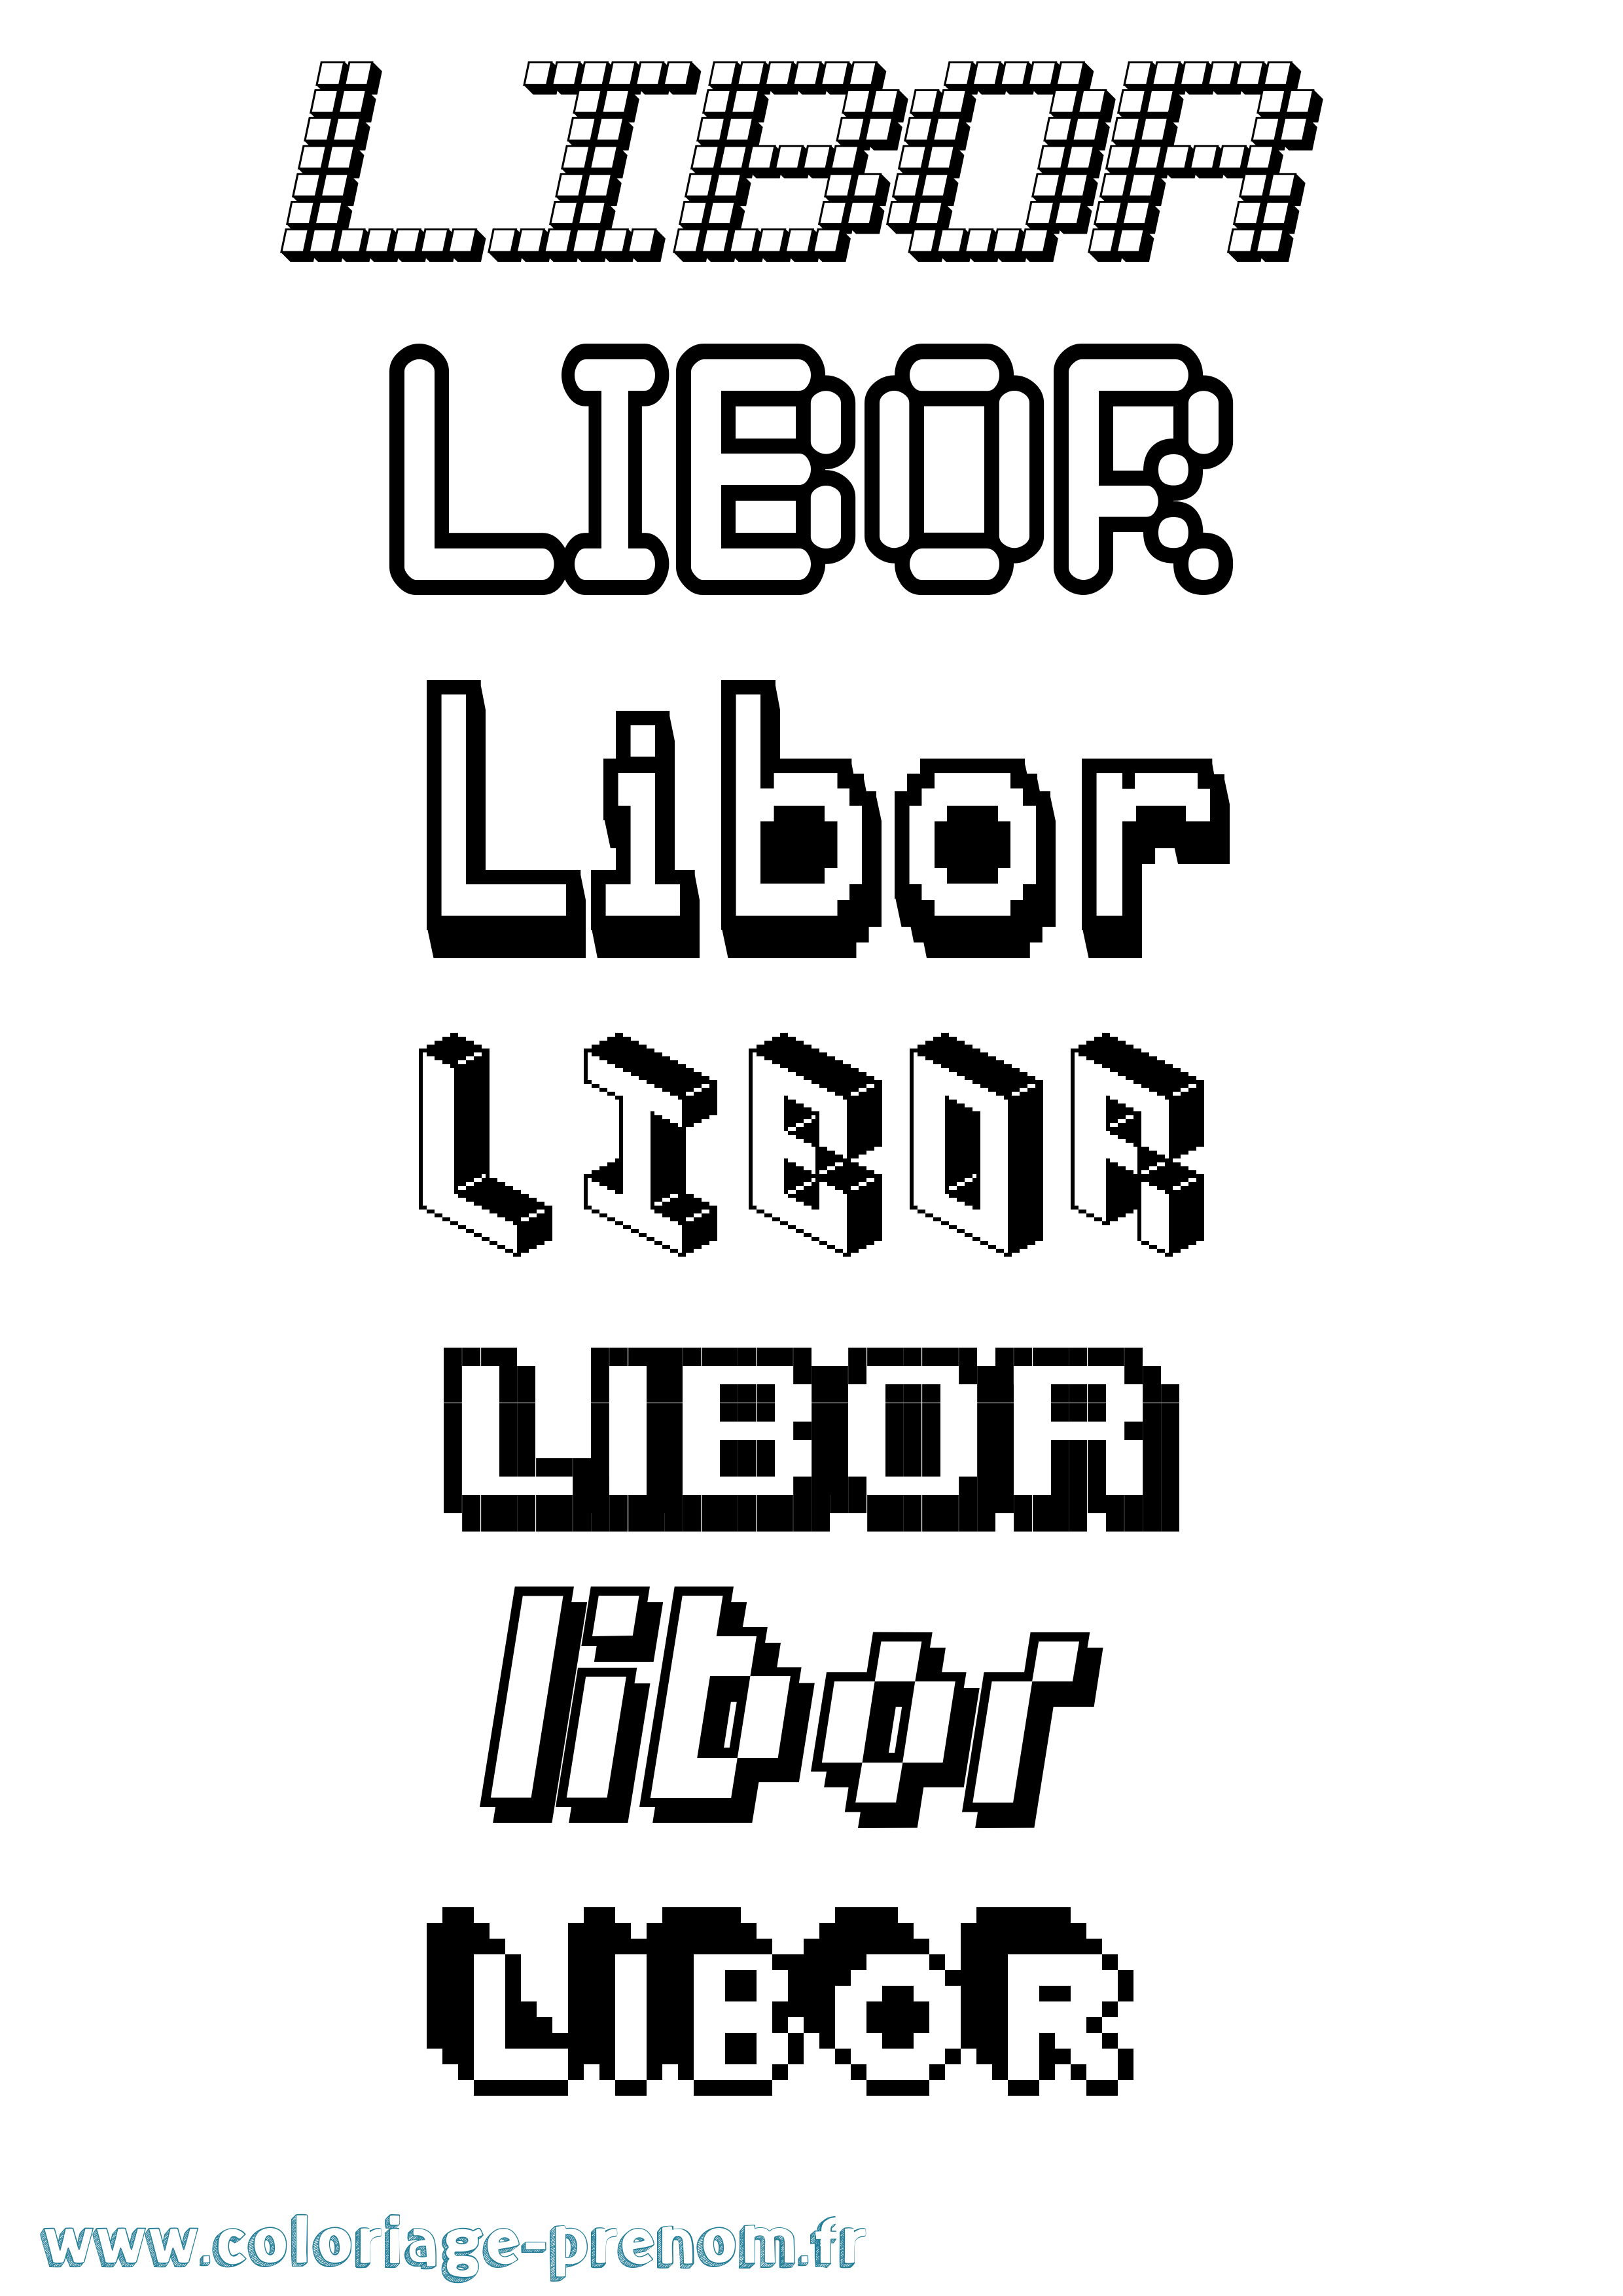 Coloriage prénom Libor Pixel